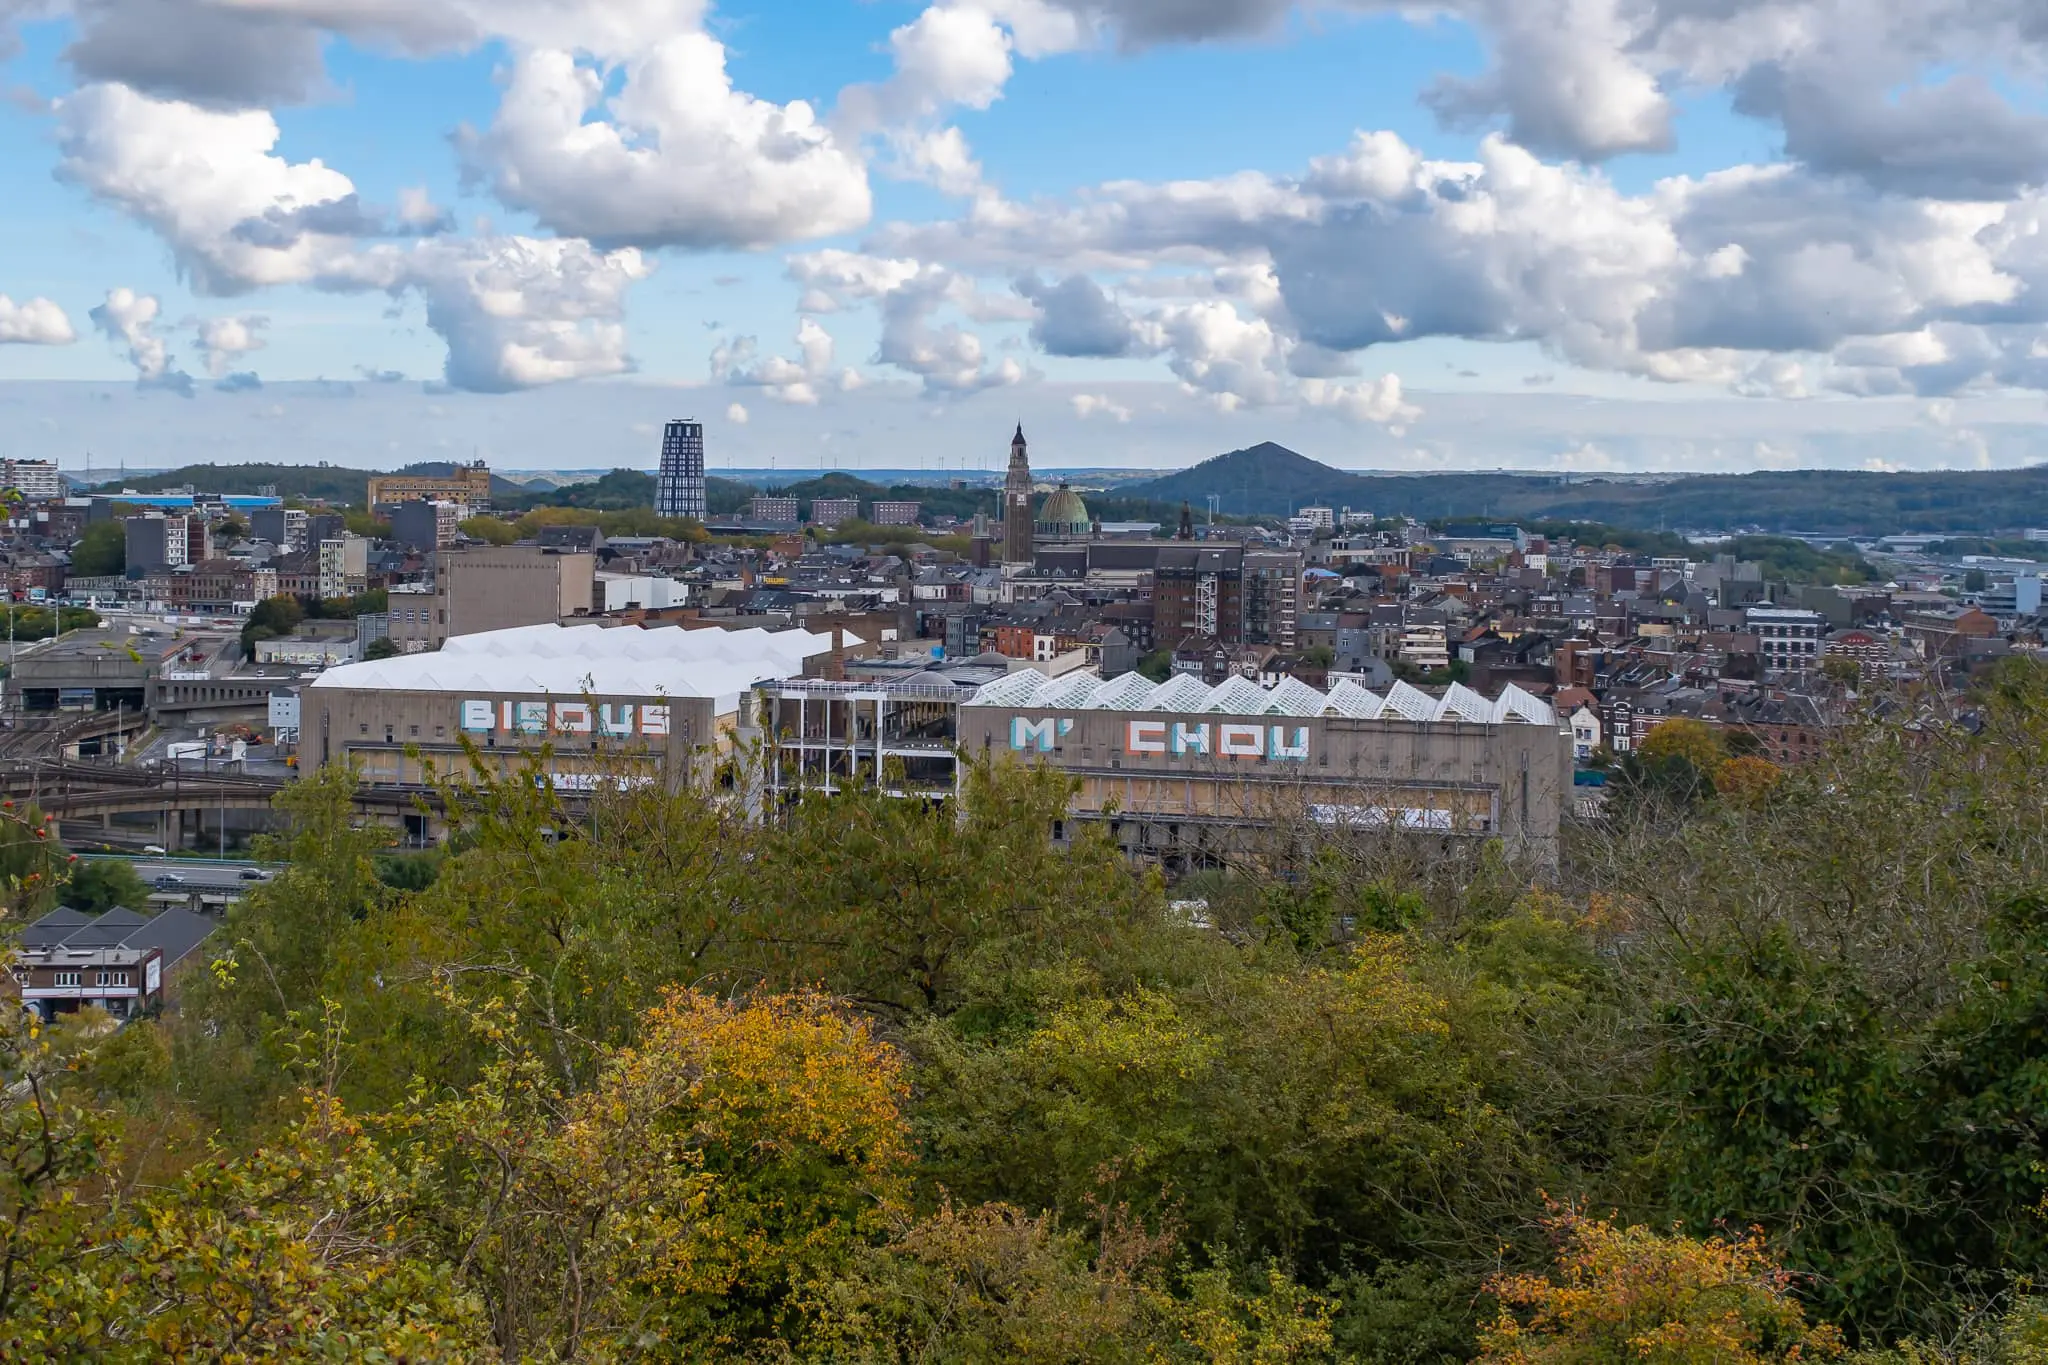 Visiter Charleroi en 1 weekend : que faire, où manger, où dormir ?